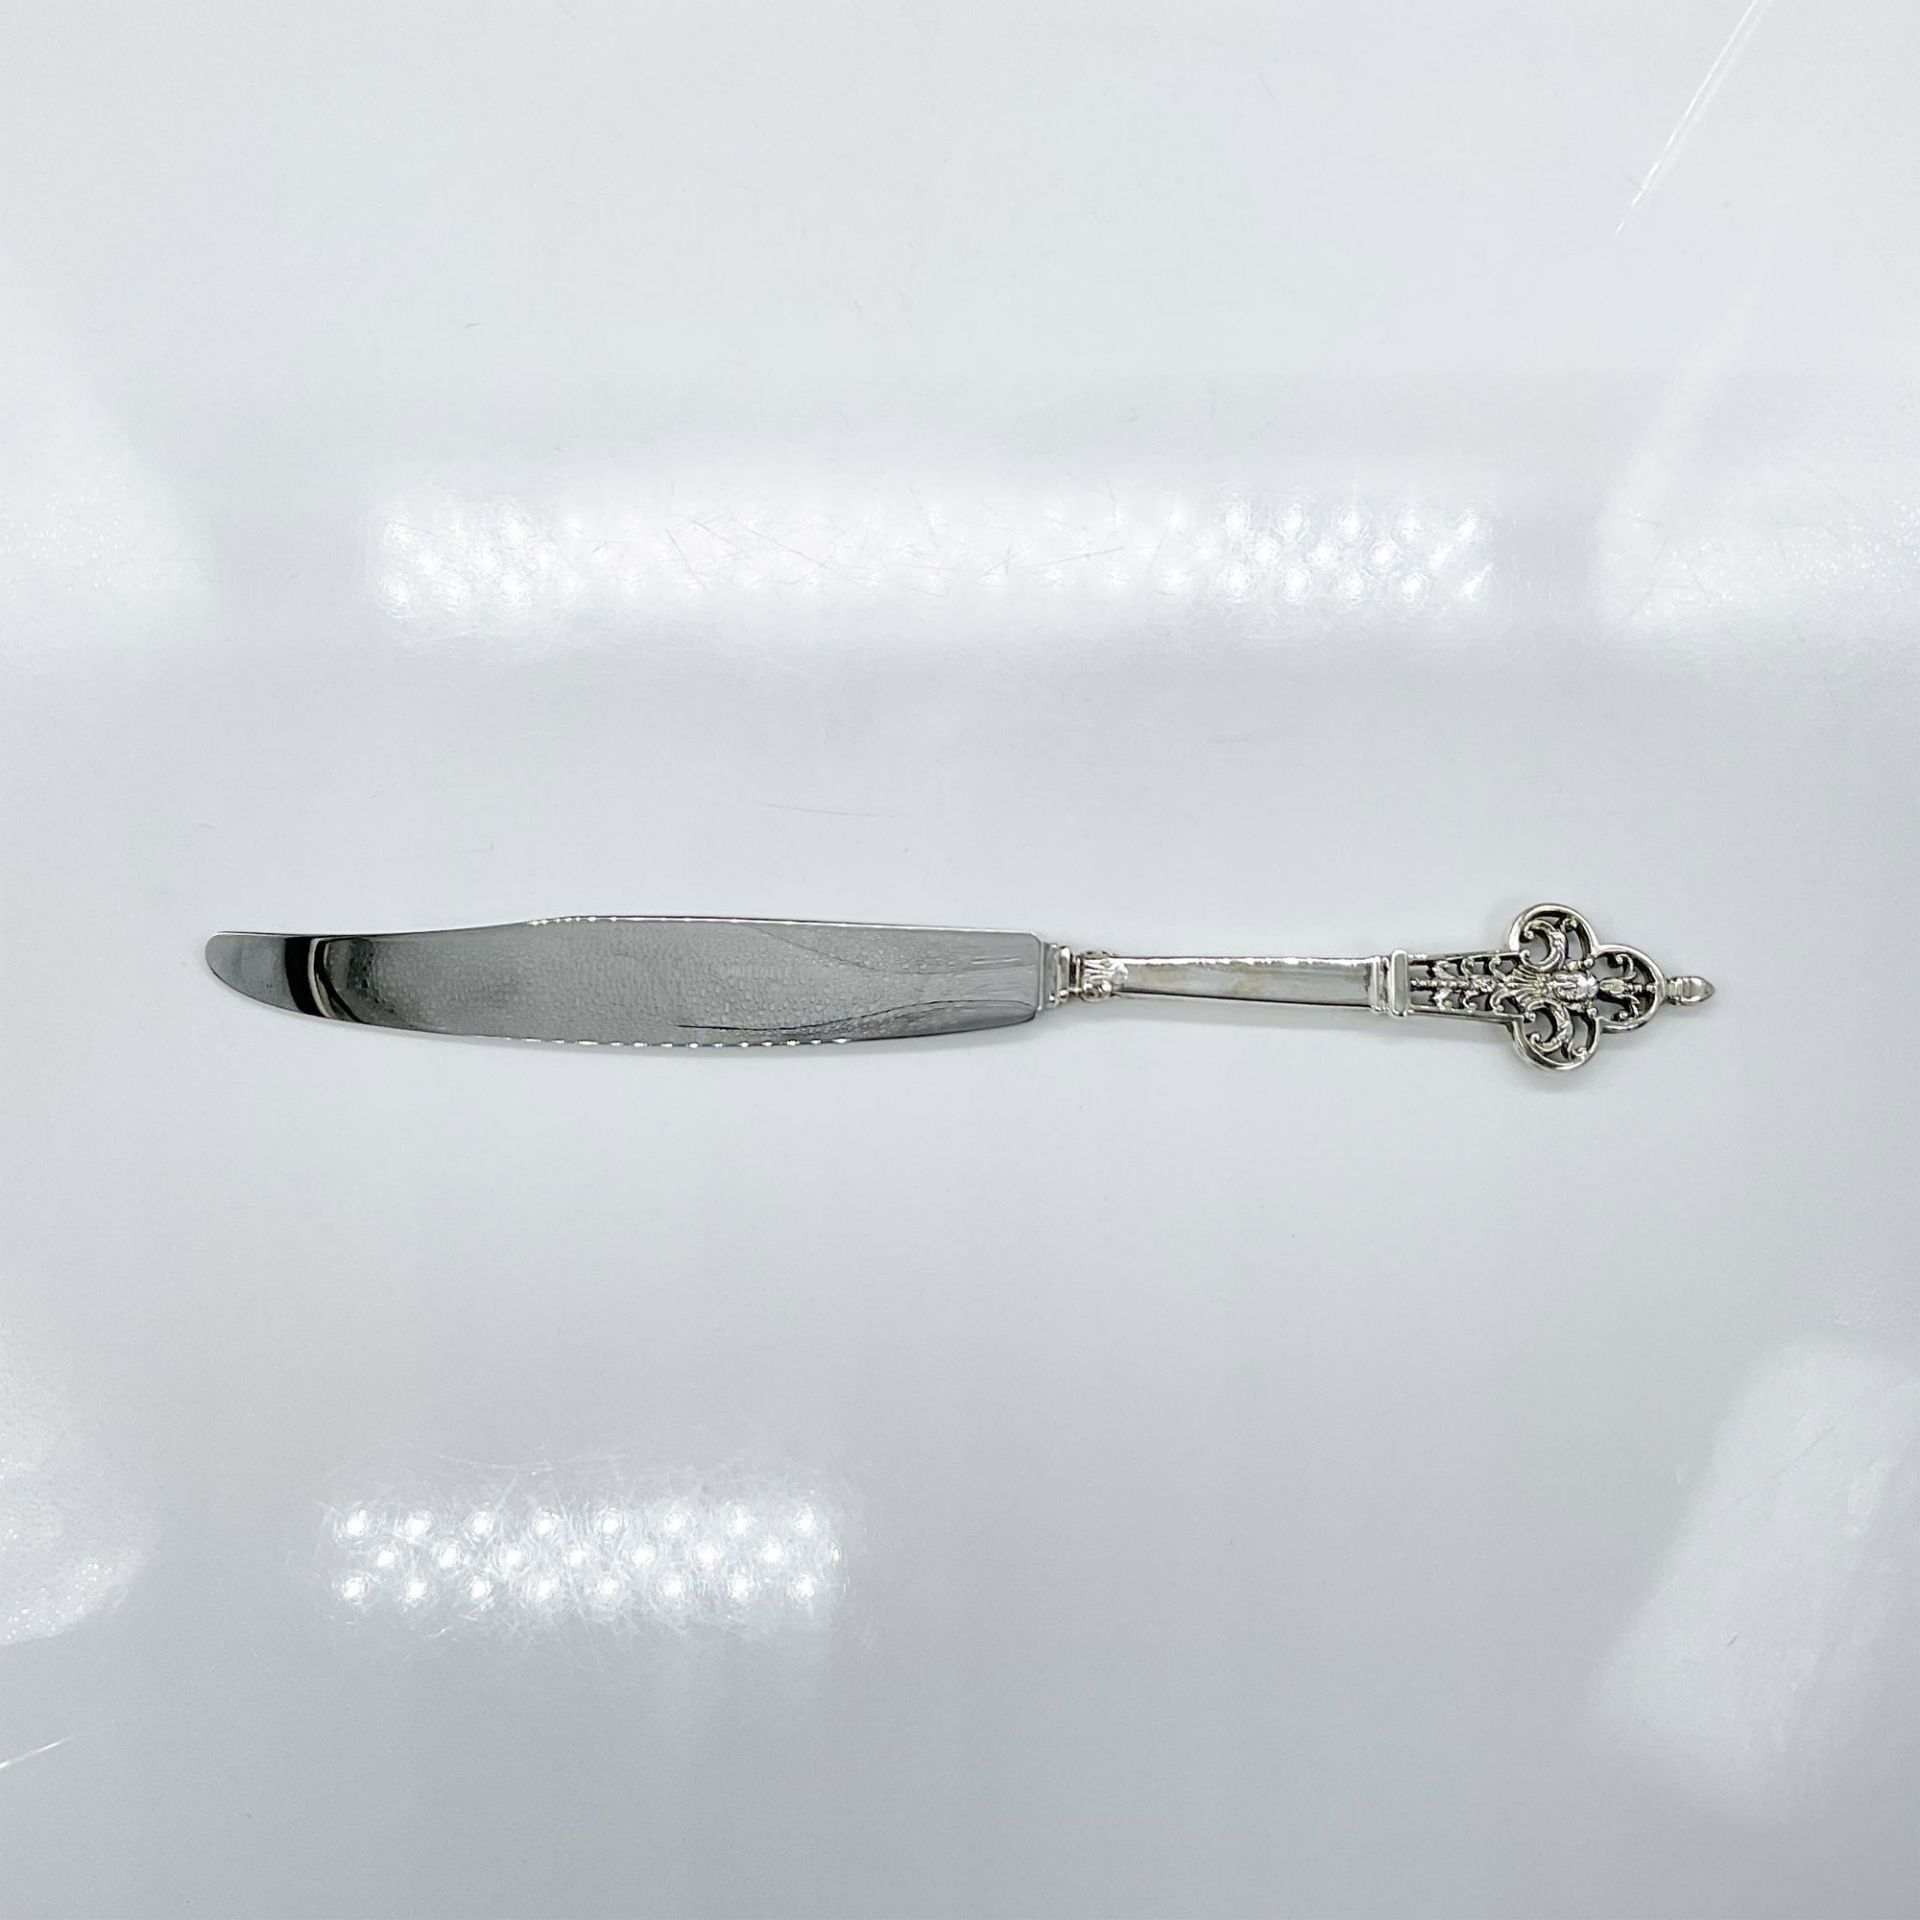 Christofle Sterling Silver Dinner Knife, Renaissance - Image 3 of 4